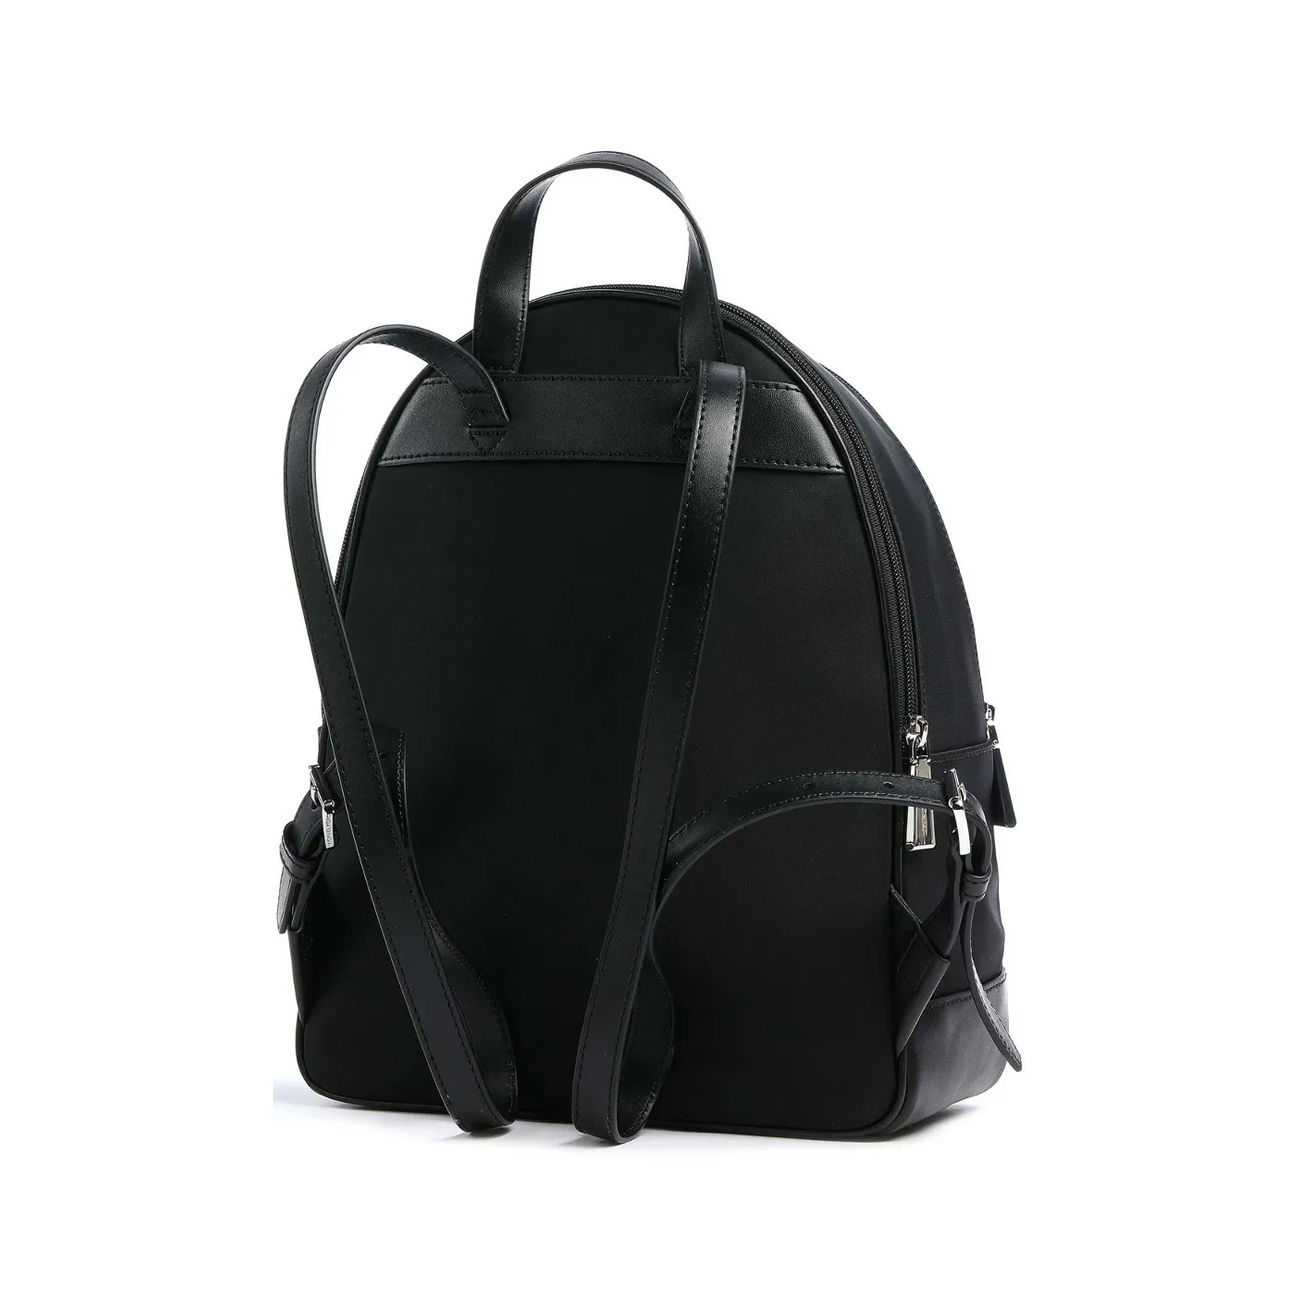 Michael Kors mini backpack comparison - YouTube